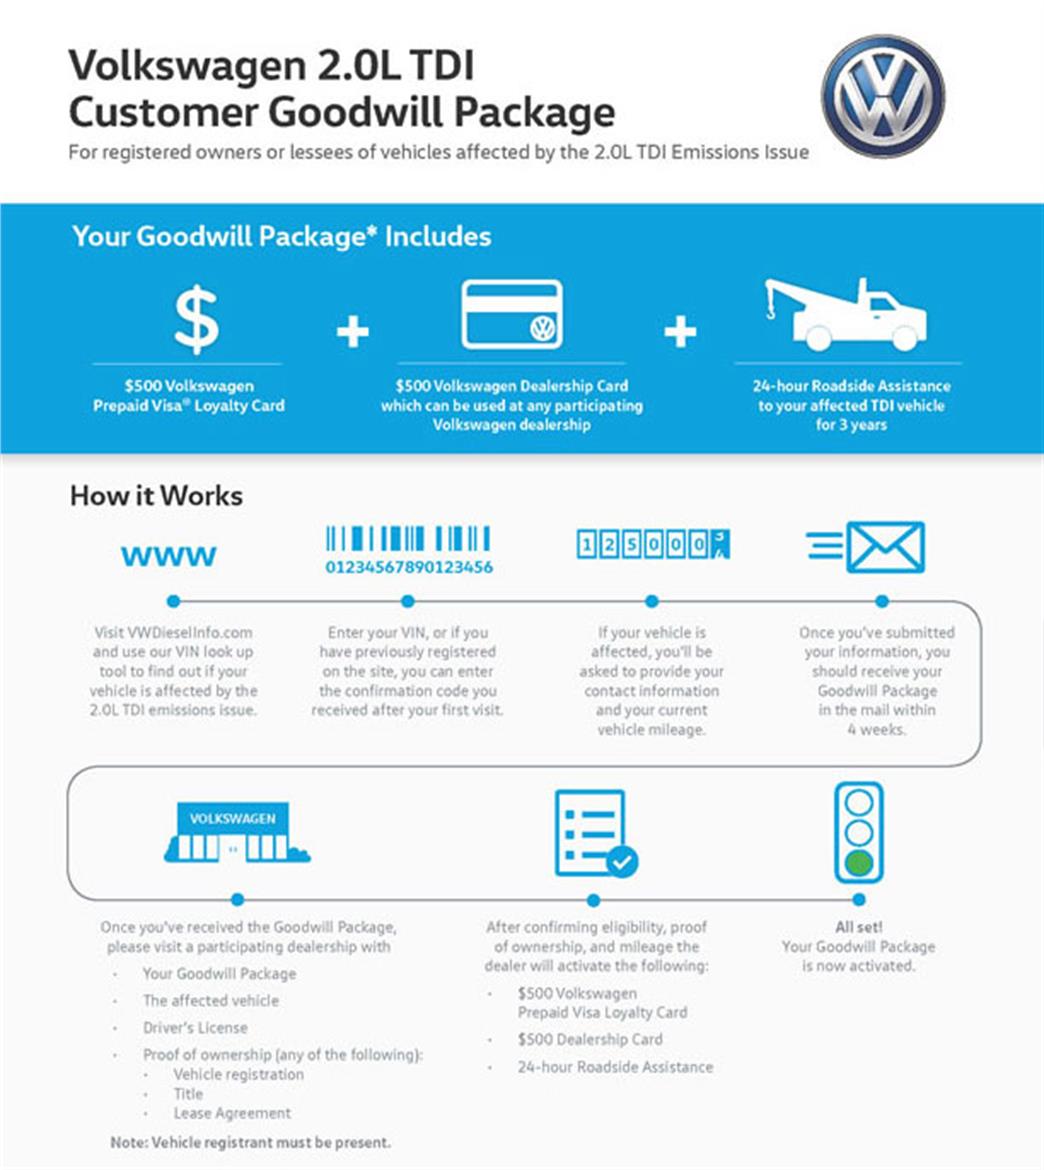 Volkswagen Goodwill Package Offers U.S. Diesel Owners $1,000, Three Years Free Roadside Assistance